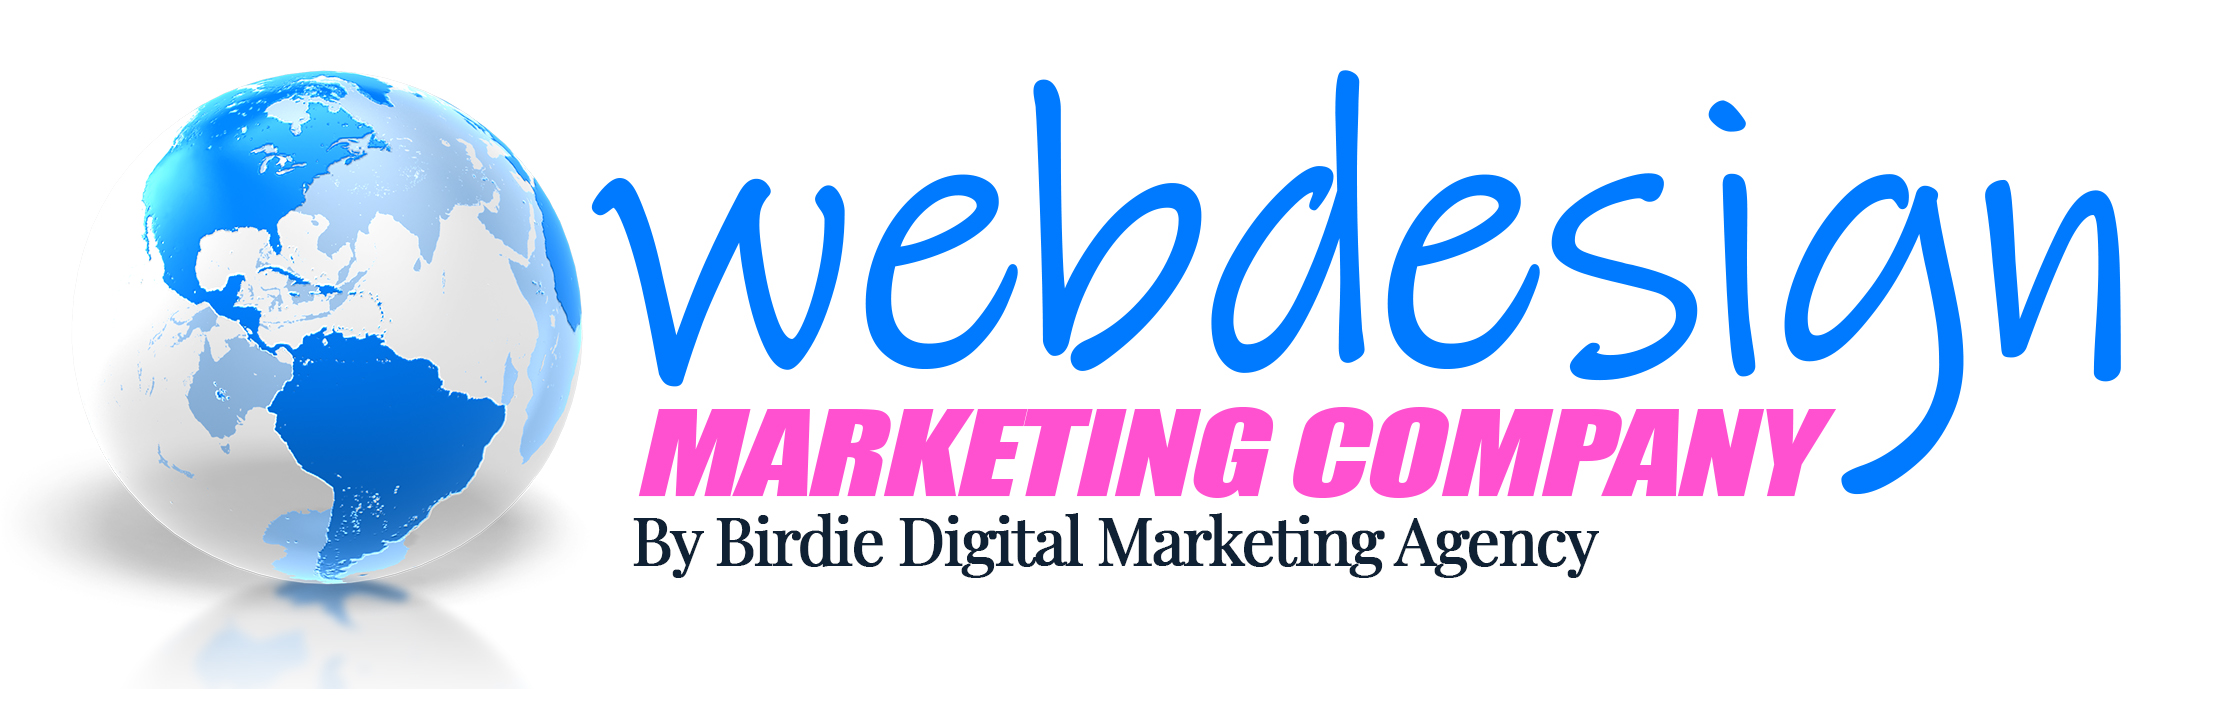 Web Design Marketing Company